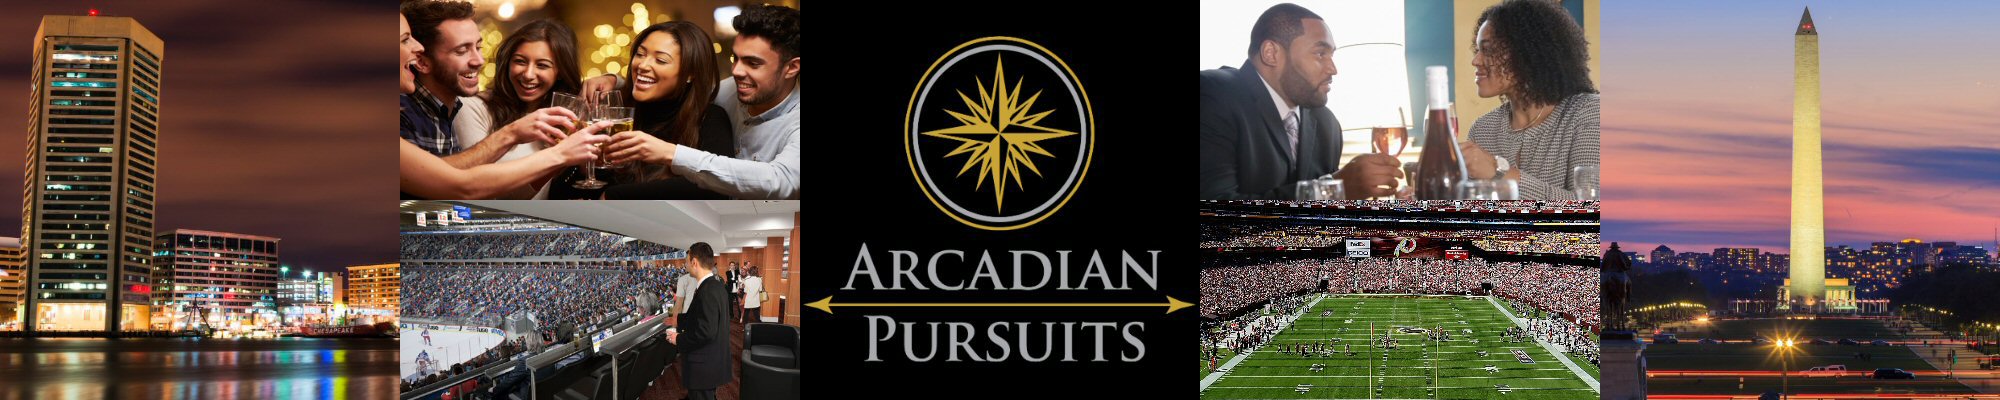 Arcadian Pursuits All Inclusive Entertainment